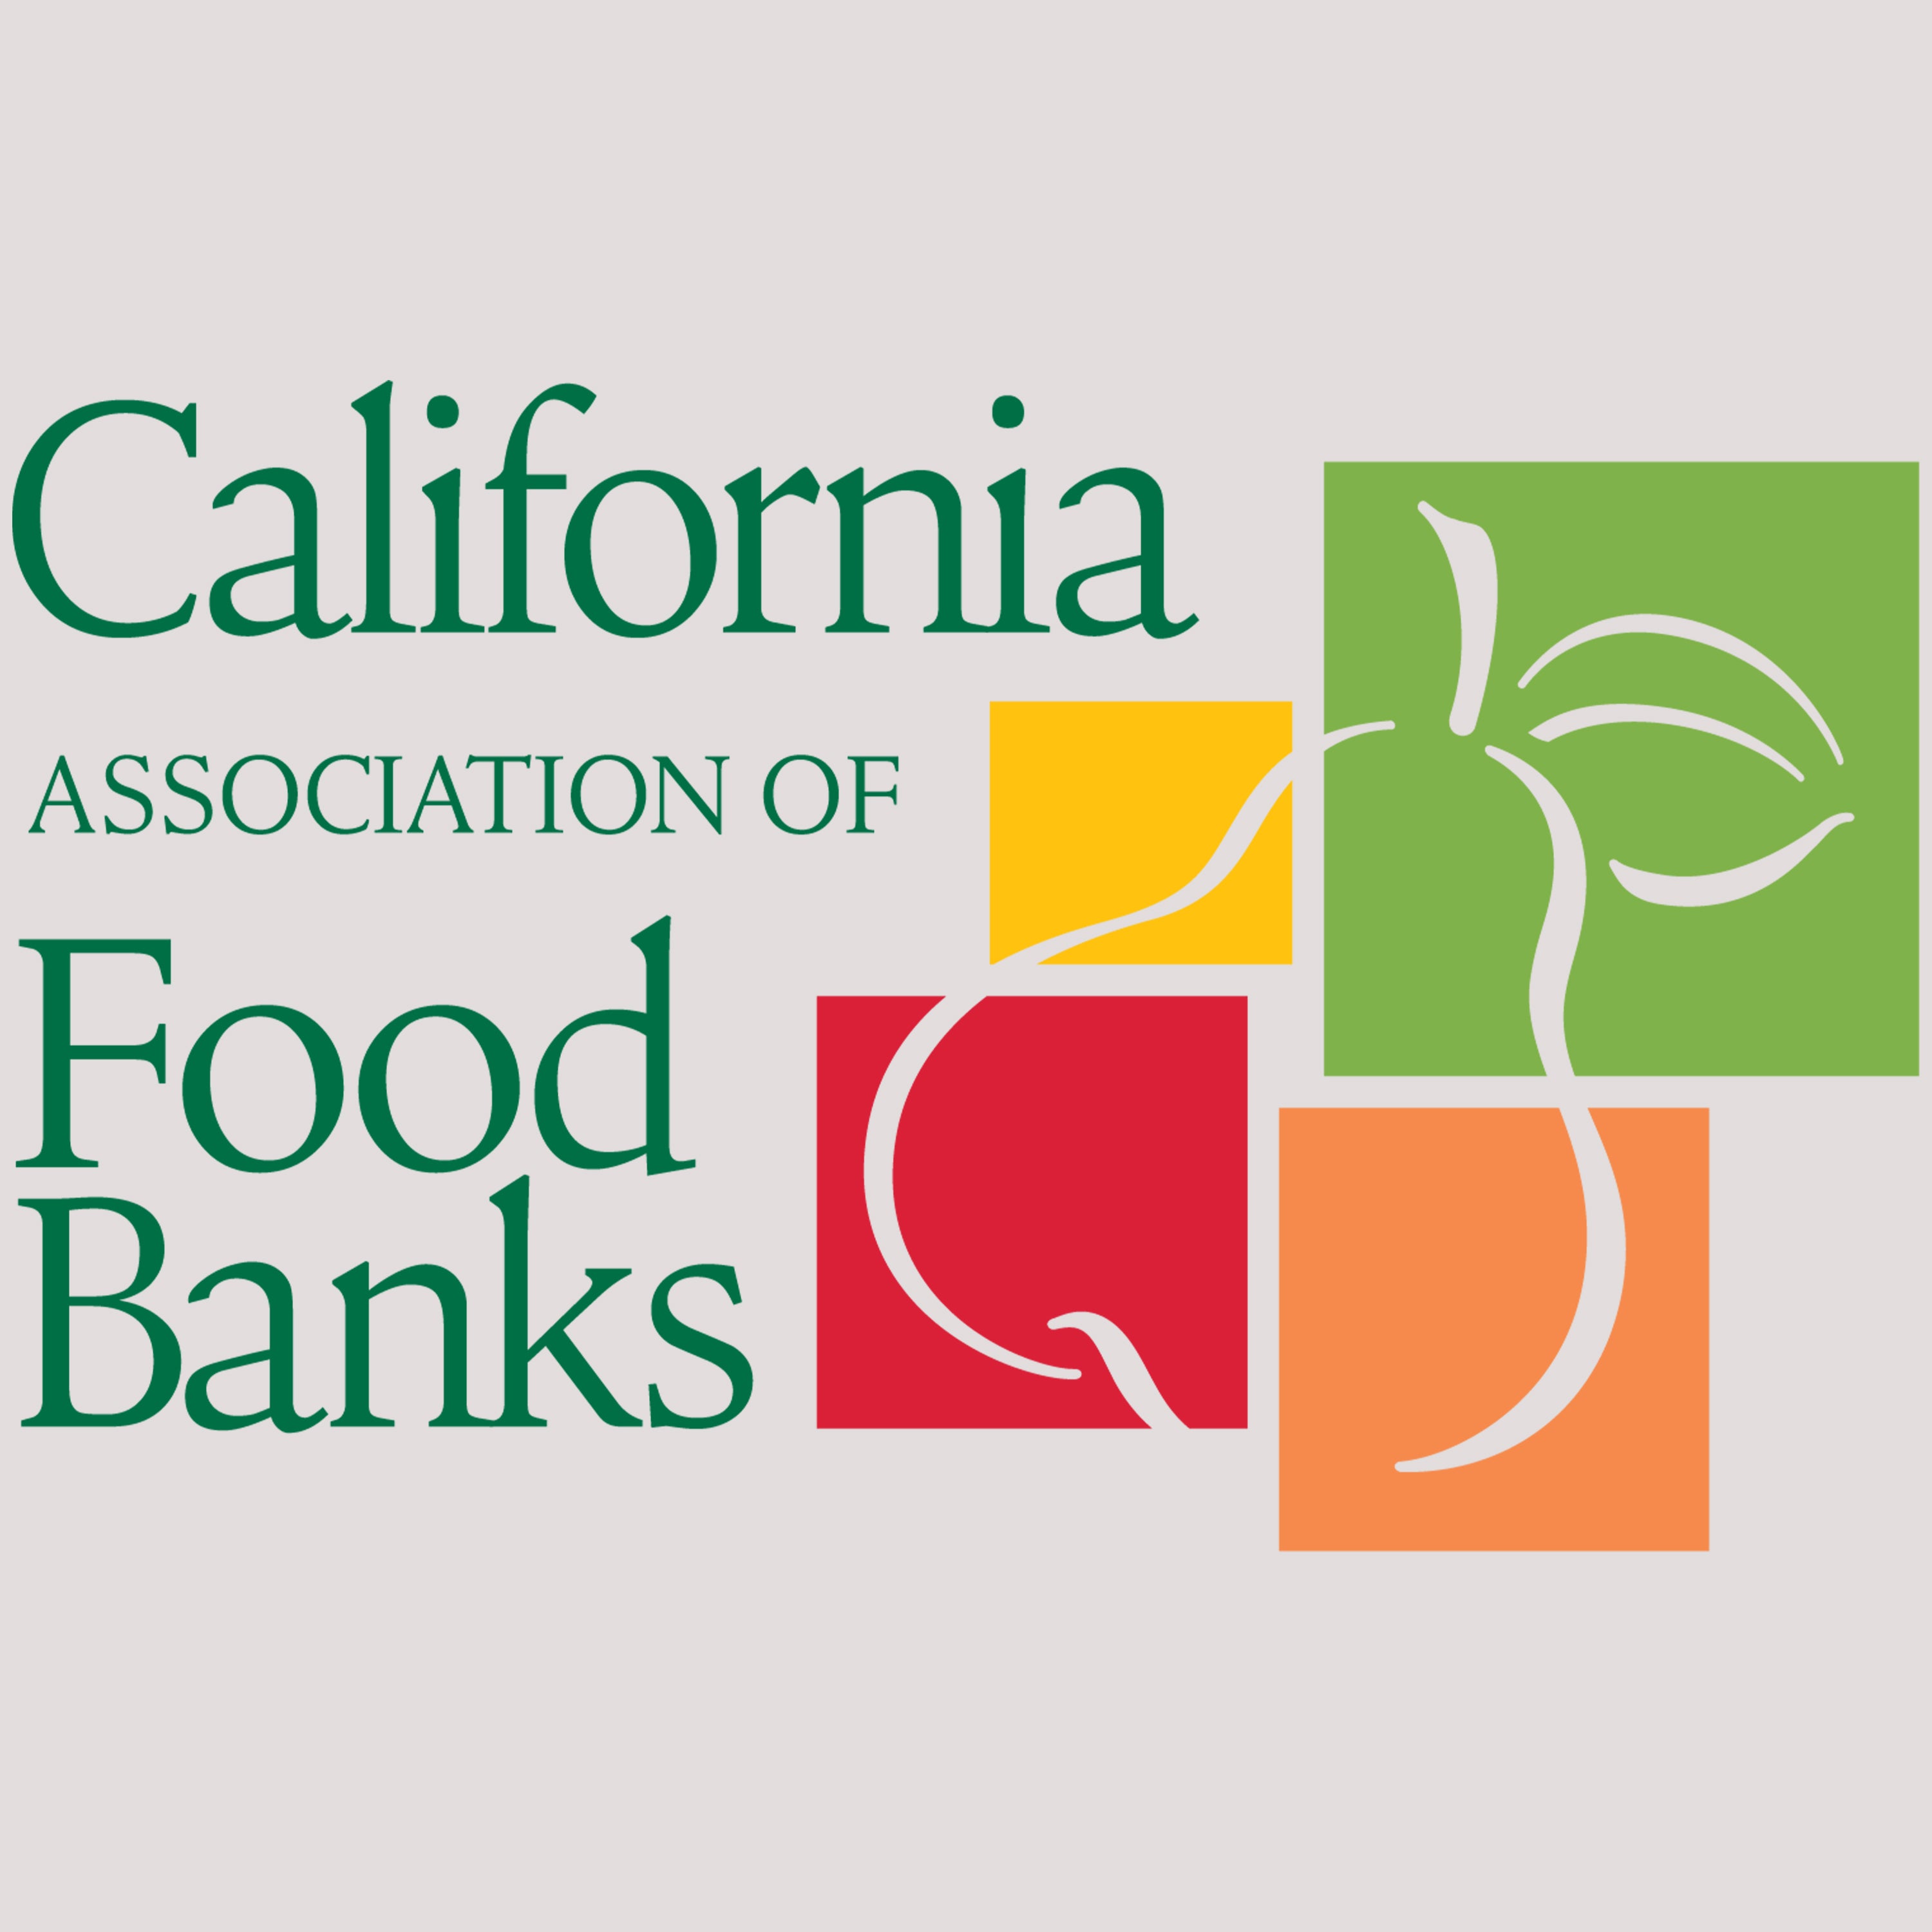 California association of food banks logo on a grey background 